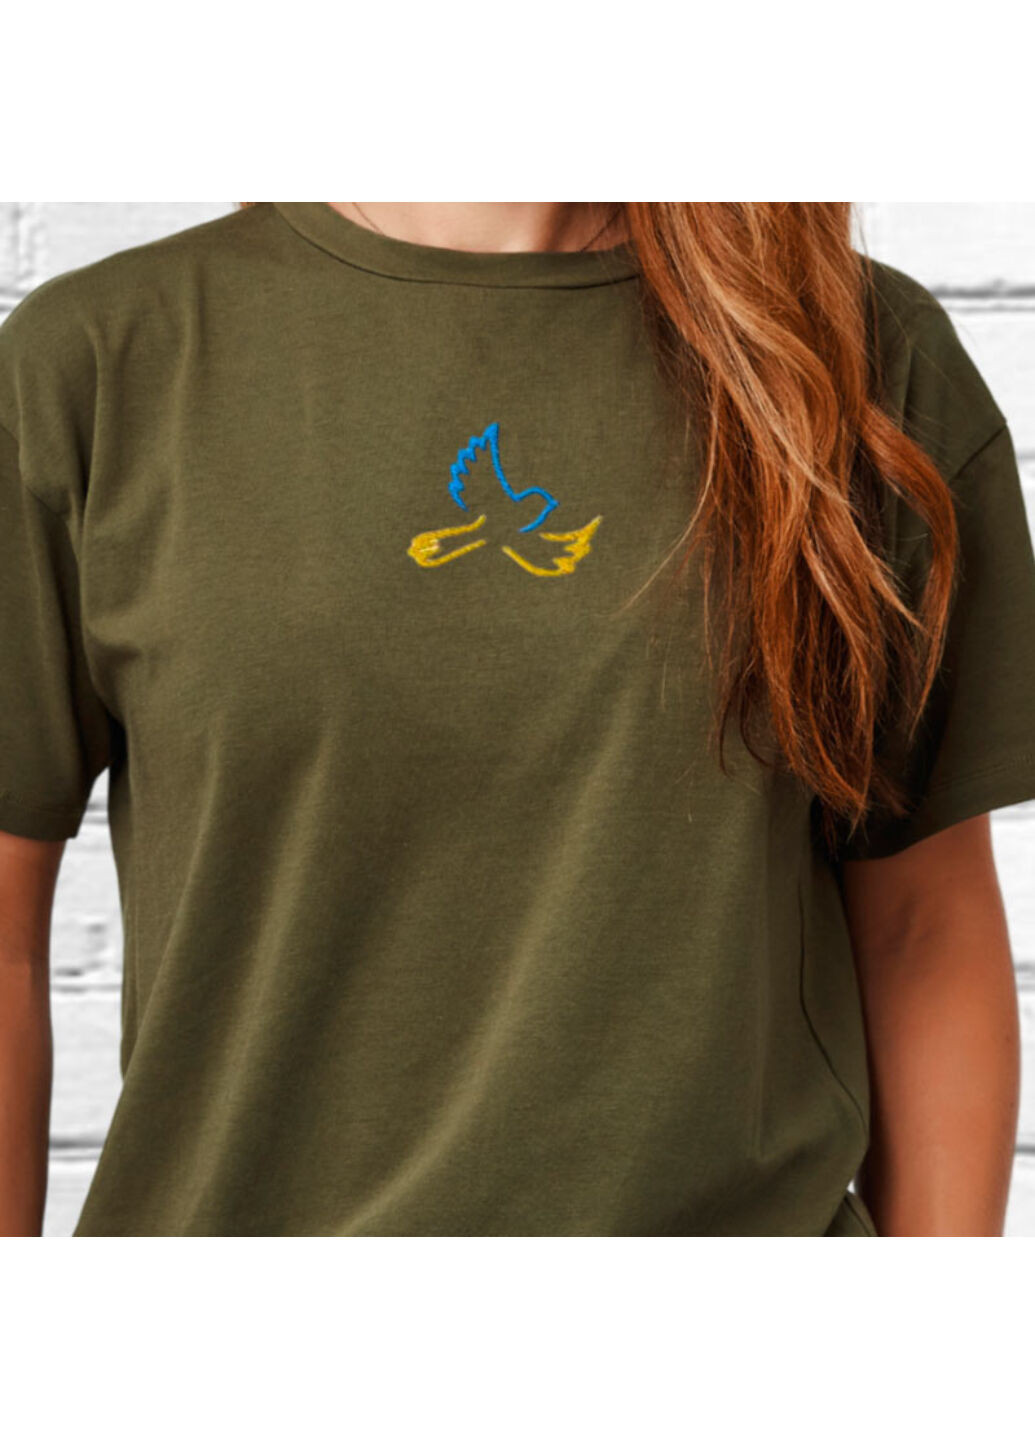 Хаки (оливковая) футболка з вишивкою голуба 02-2 женская хаки 2xl No Brand